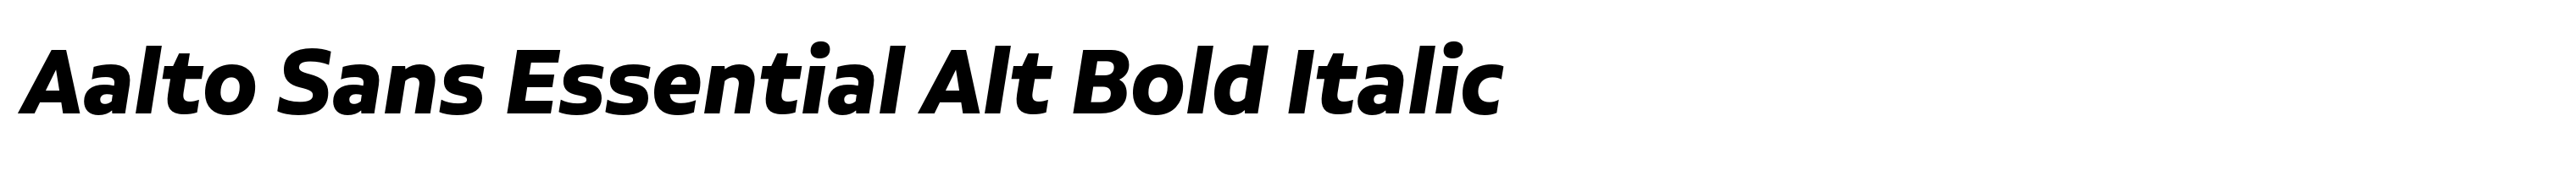 Aalto Sans Essential Alt Bold Italic